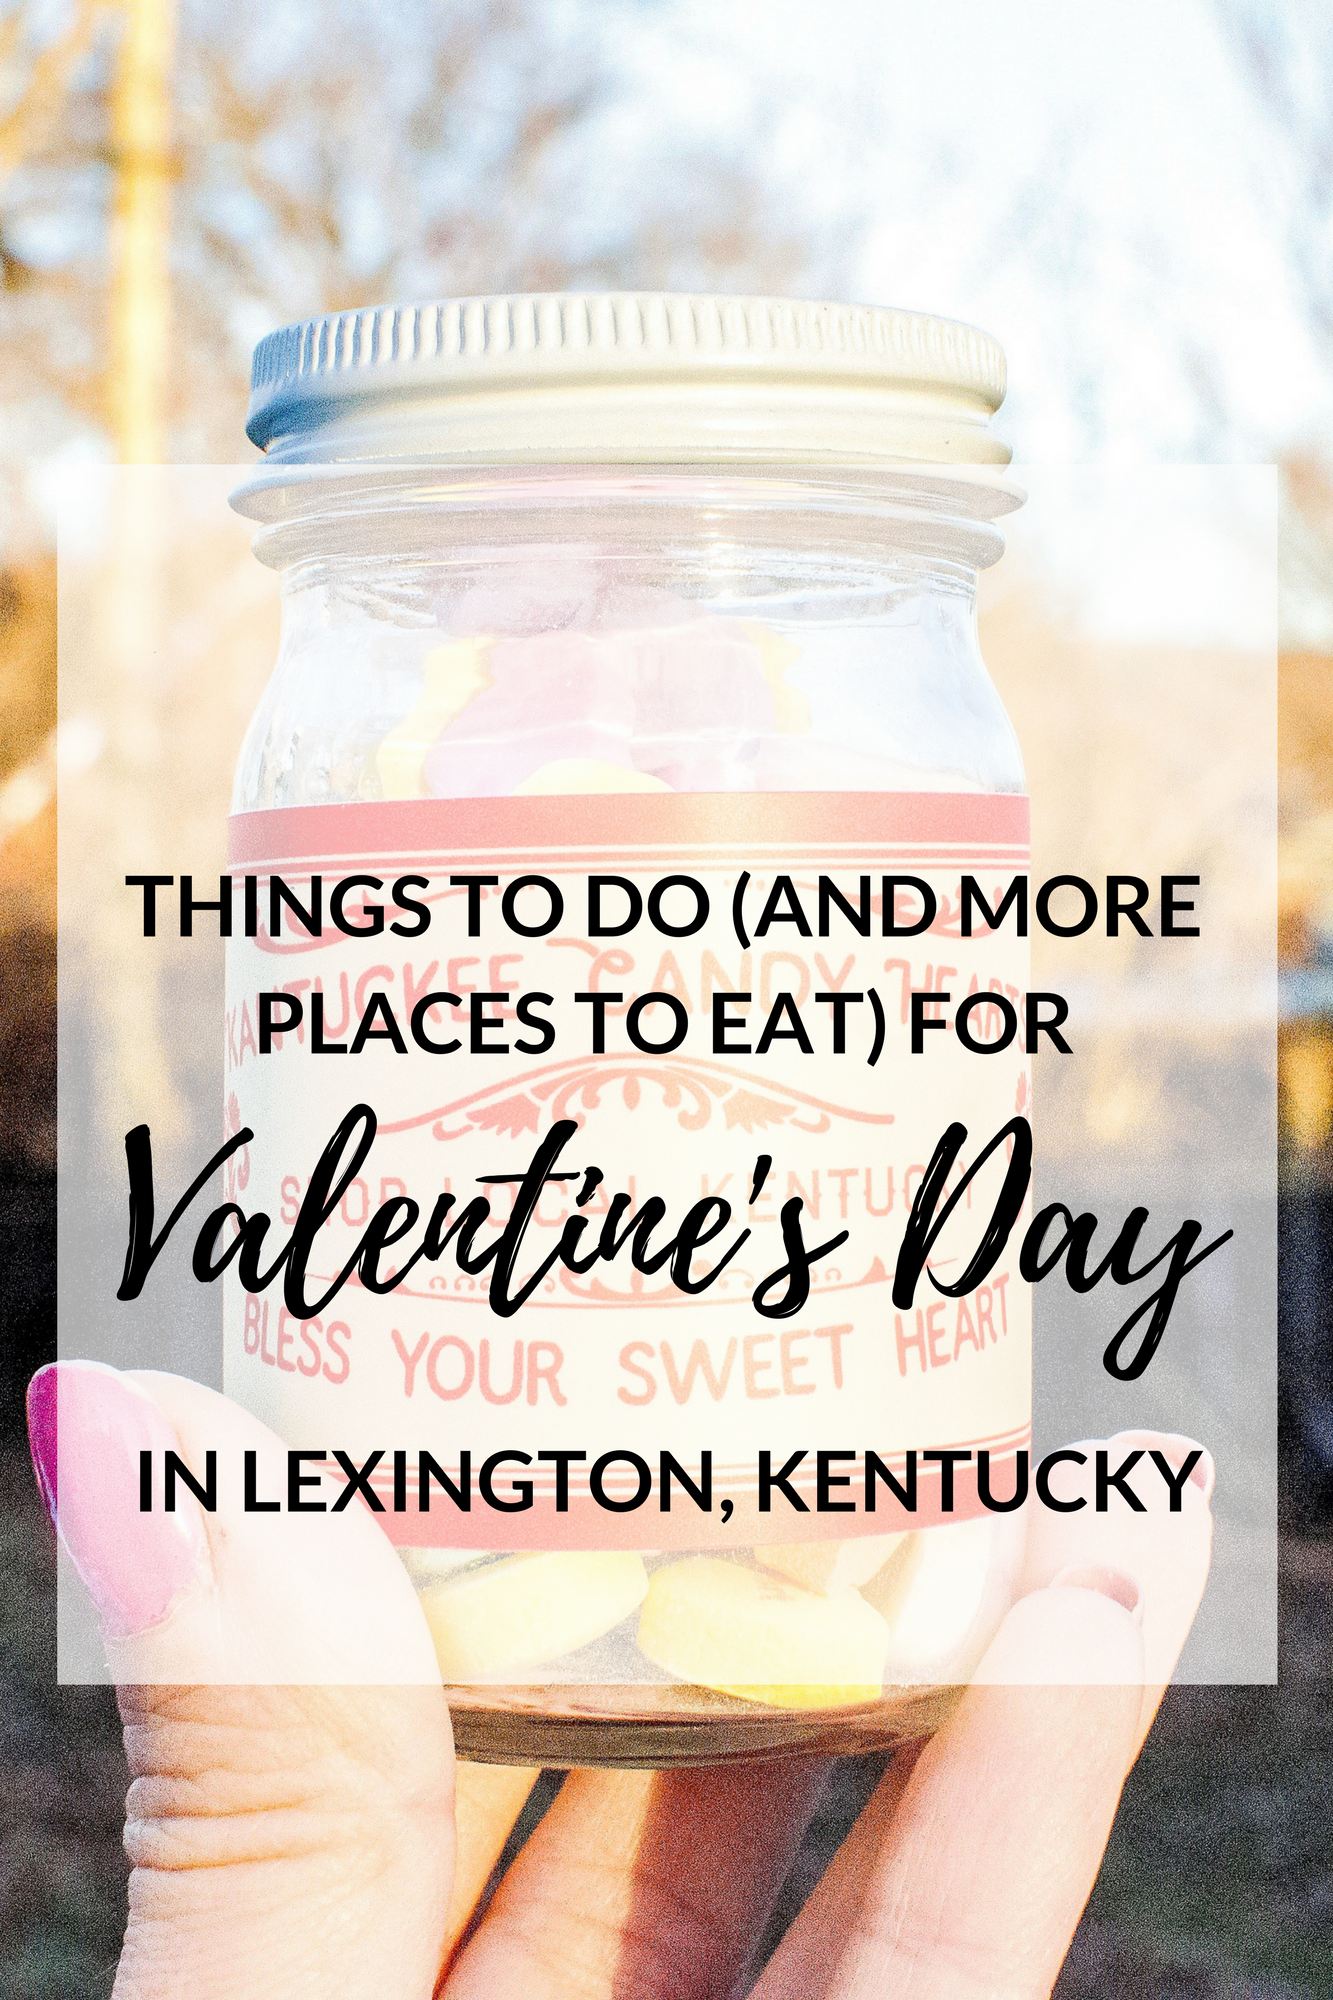 things to do lexington kentucky valentine's day